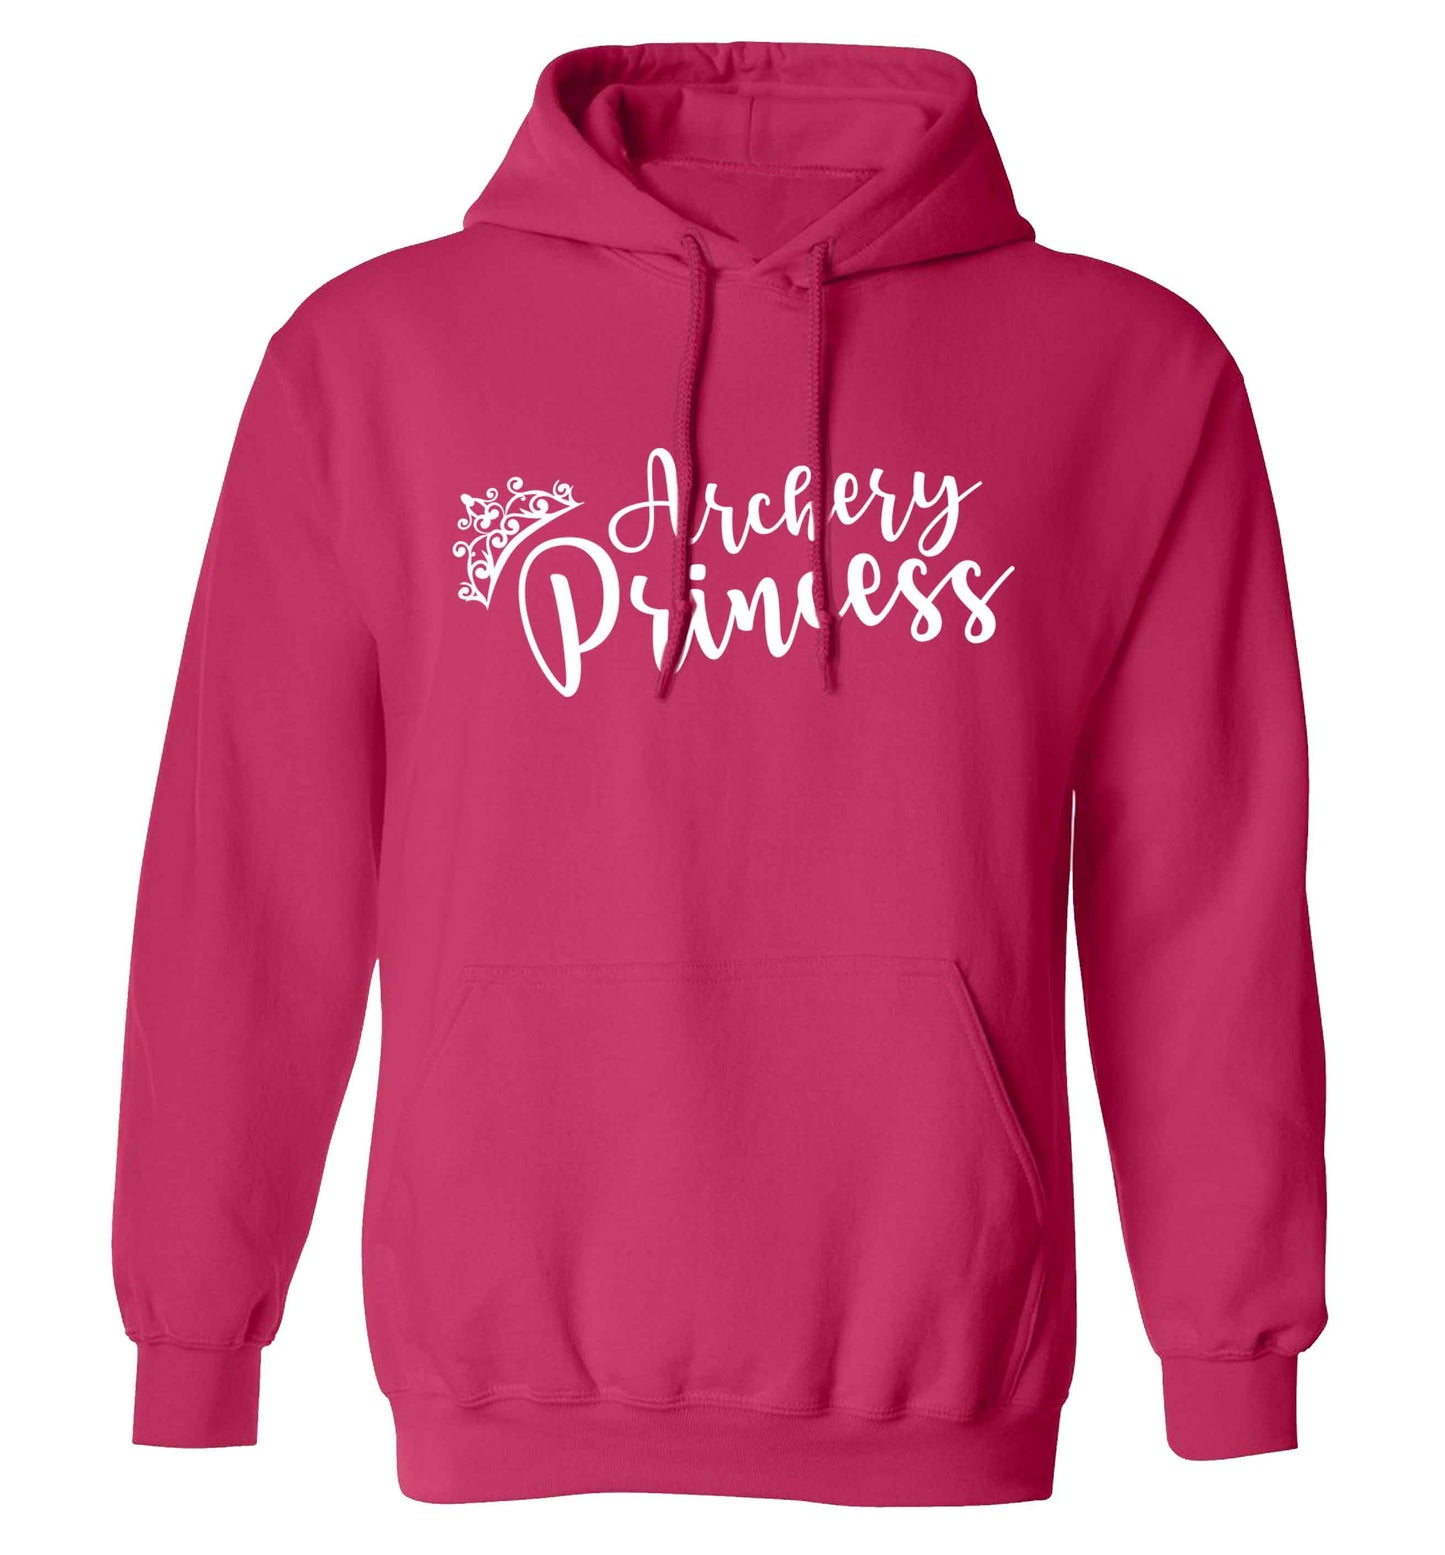 Archery princess adults unisex pink hoodie 2XL